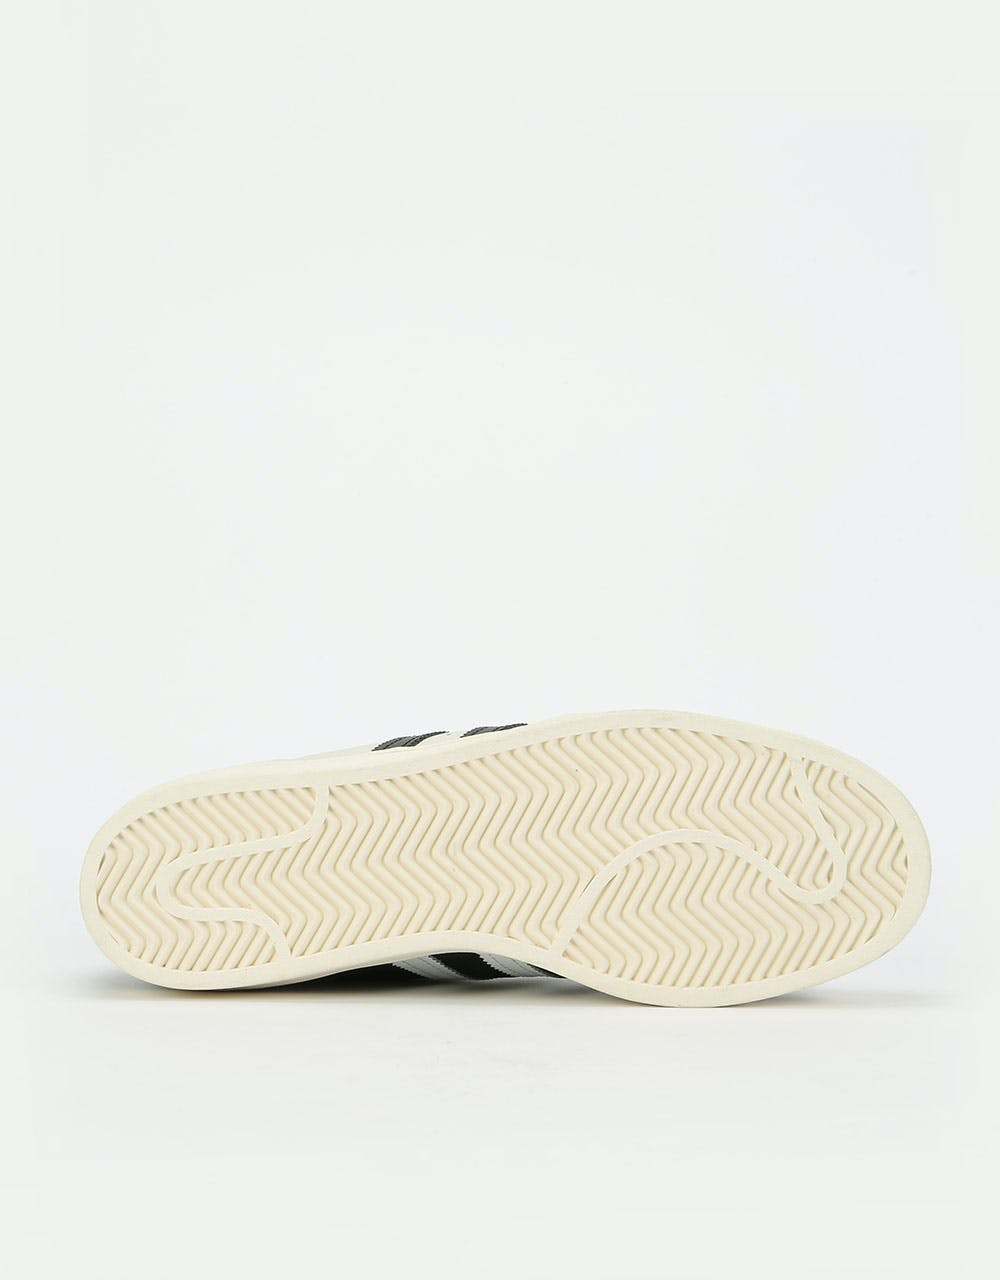 Adidas Superstar 50 Skate Shoes - White/Core Black/Gold Metallic